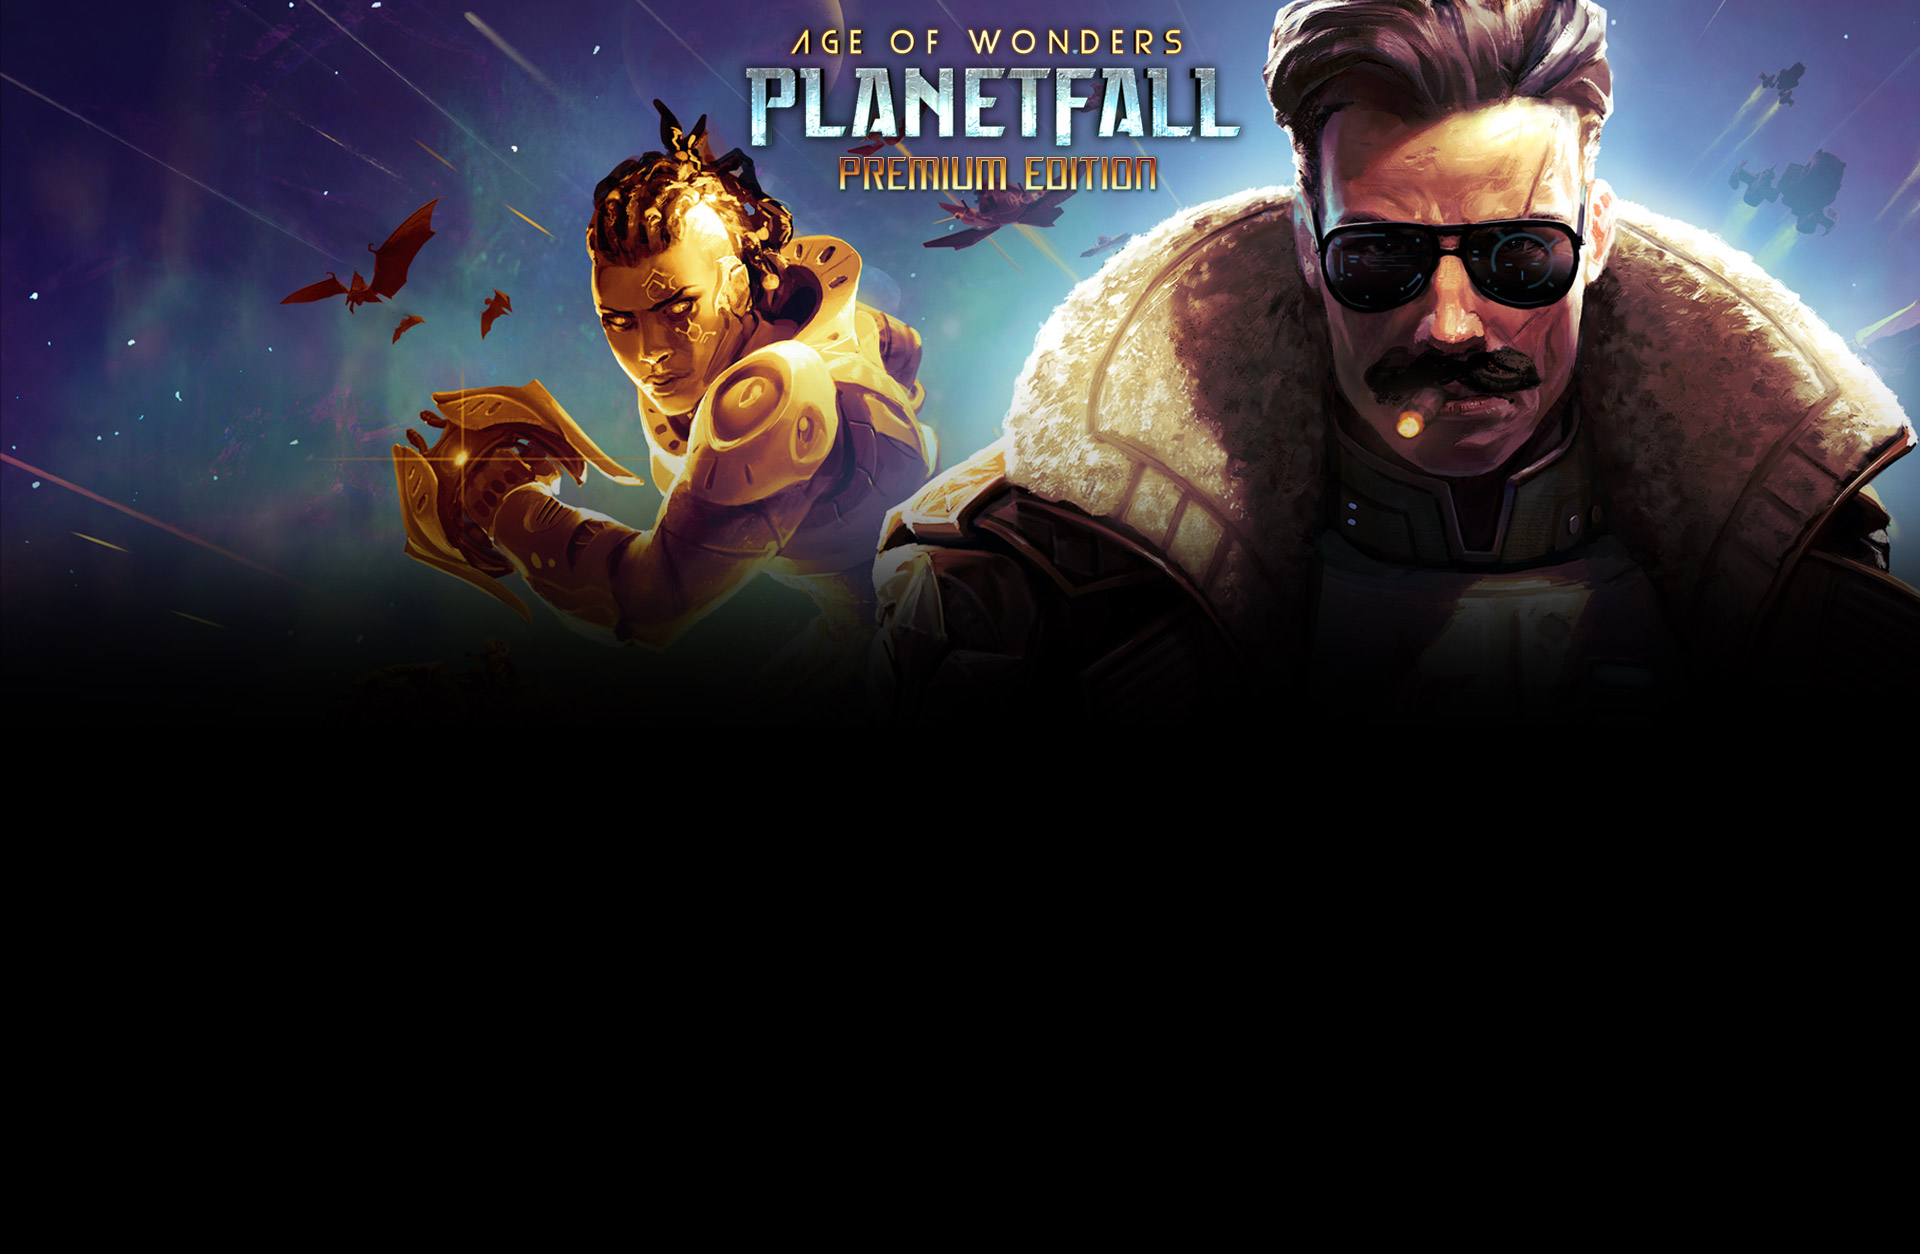 Age of Wonders: Planetfall - Premium Edition